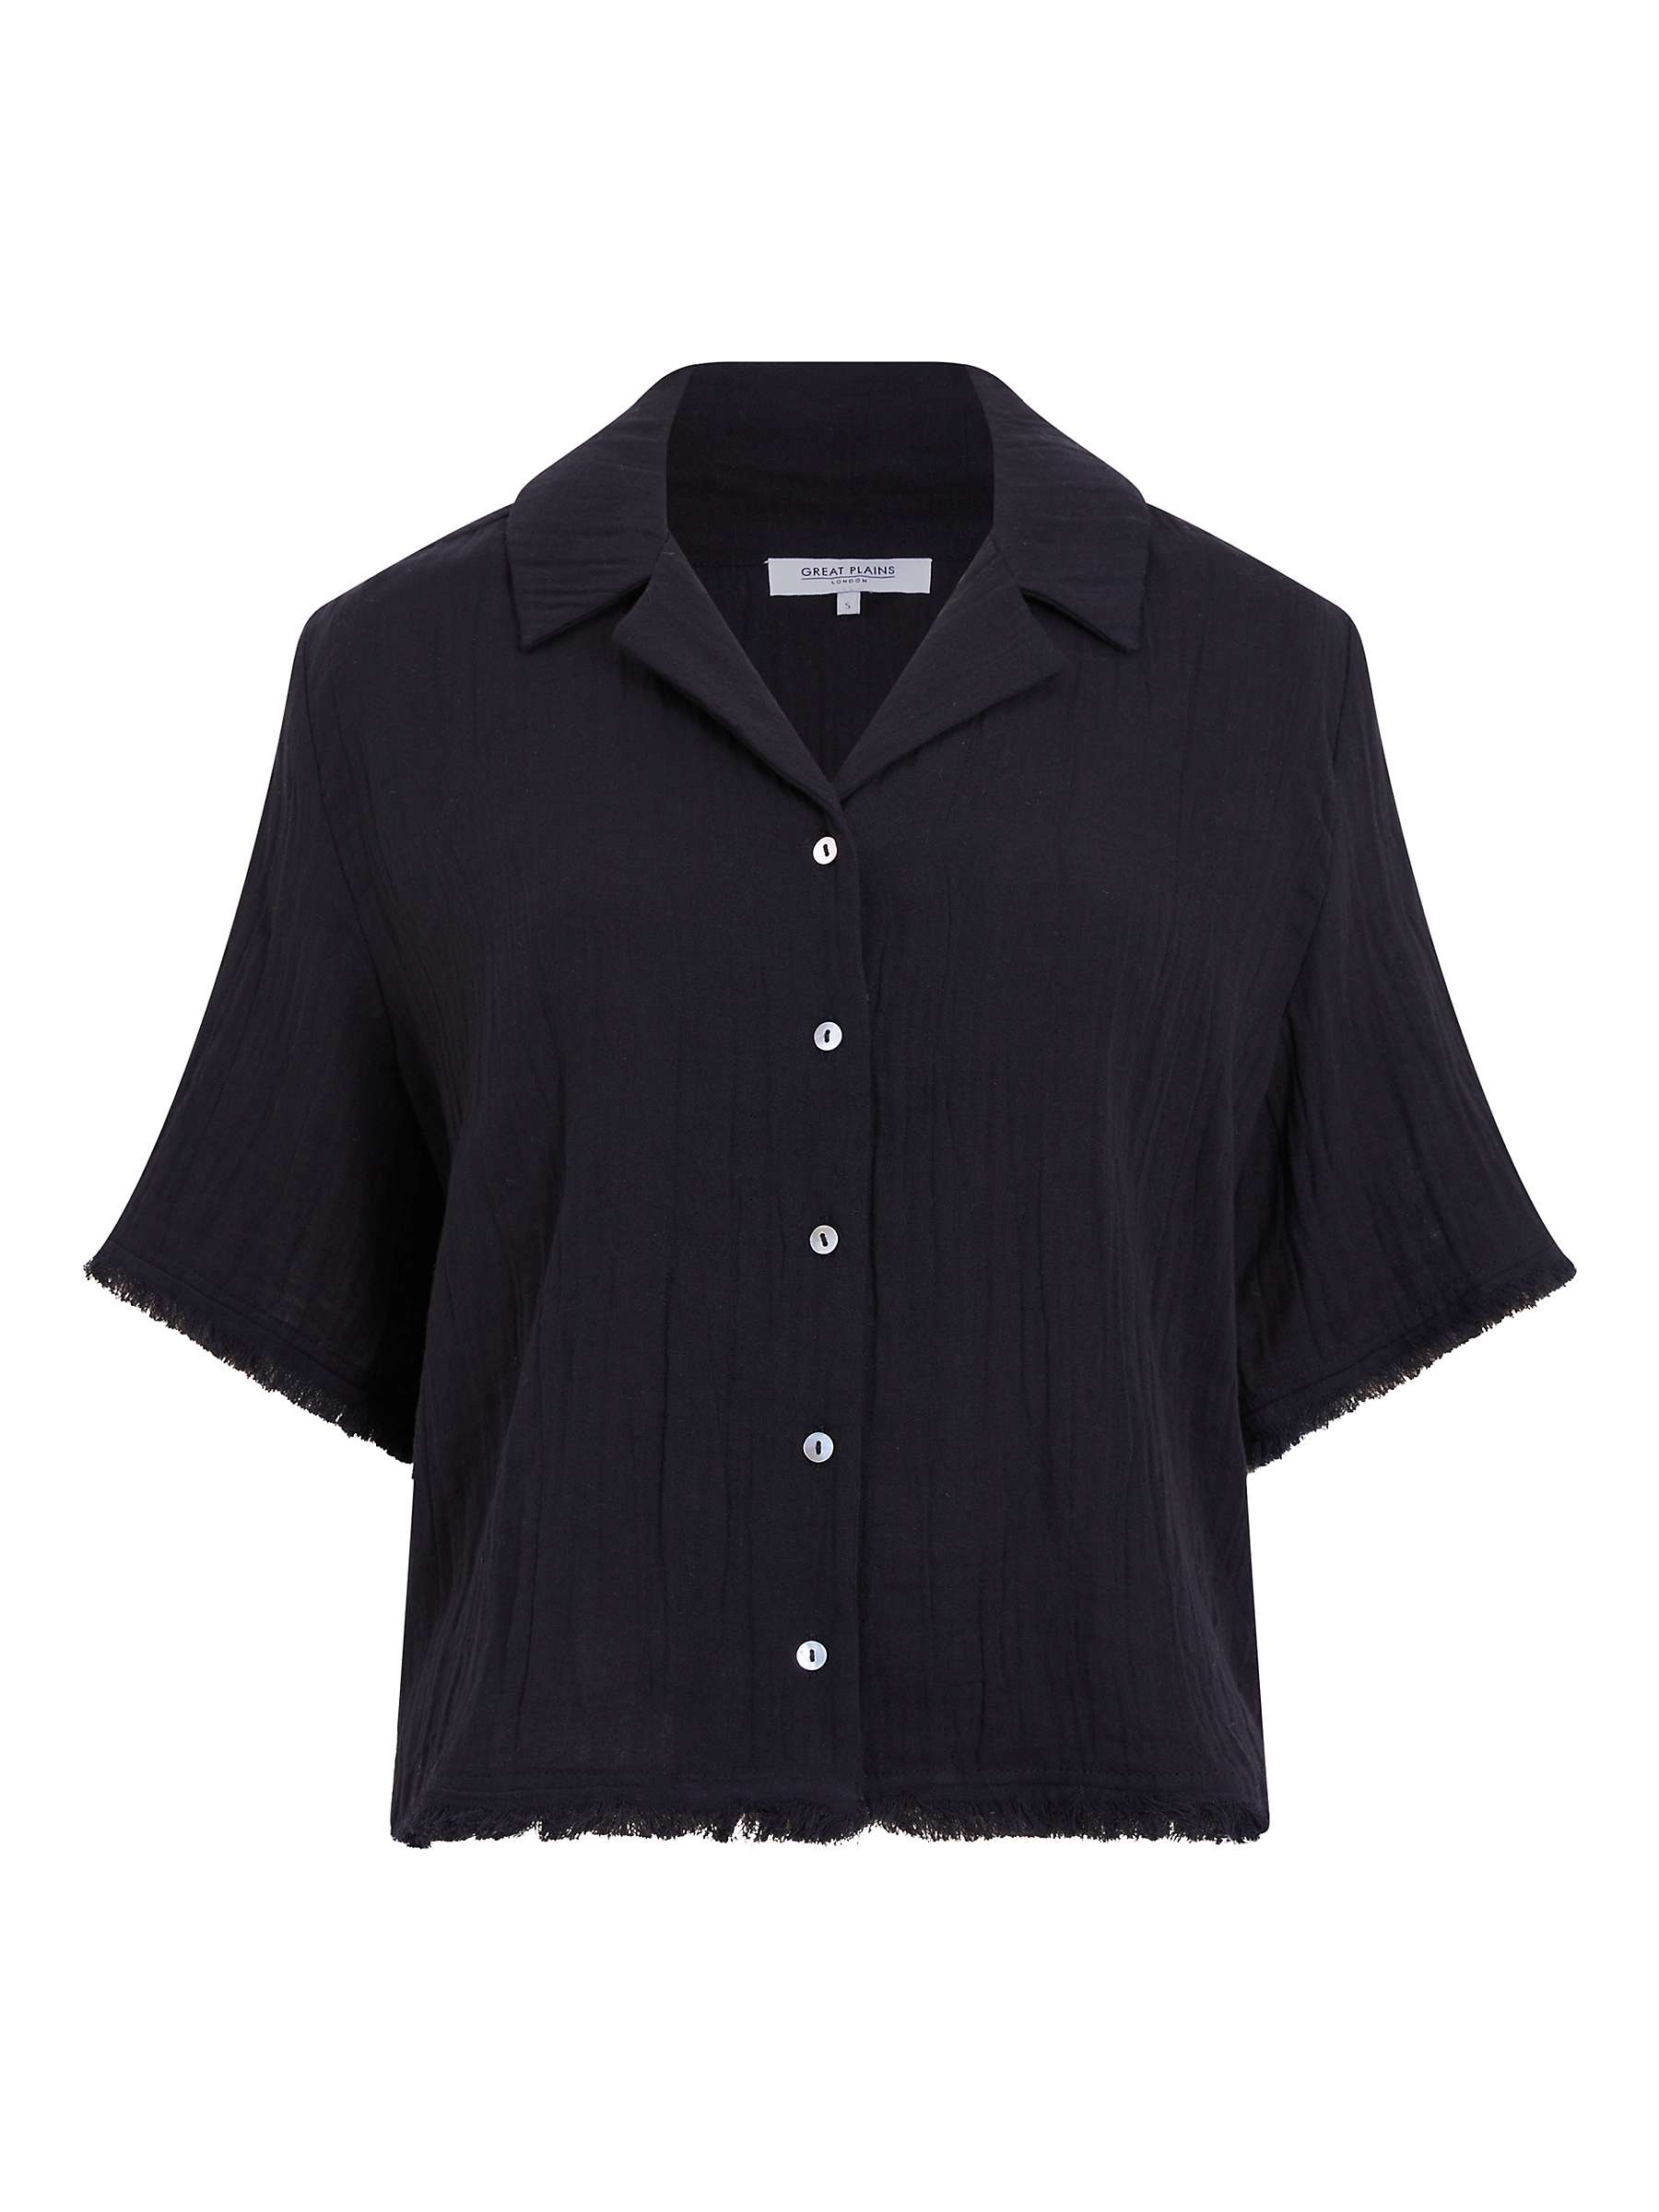 Buy Great Plains Fray Edge Cotton Shirt Online at johnlewis.com